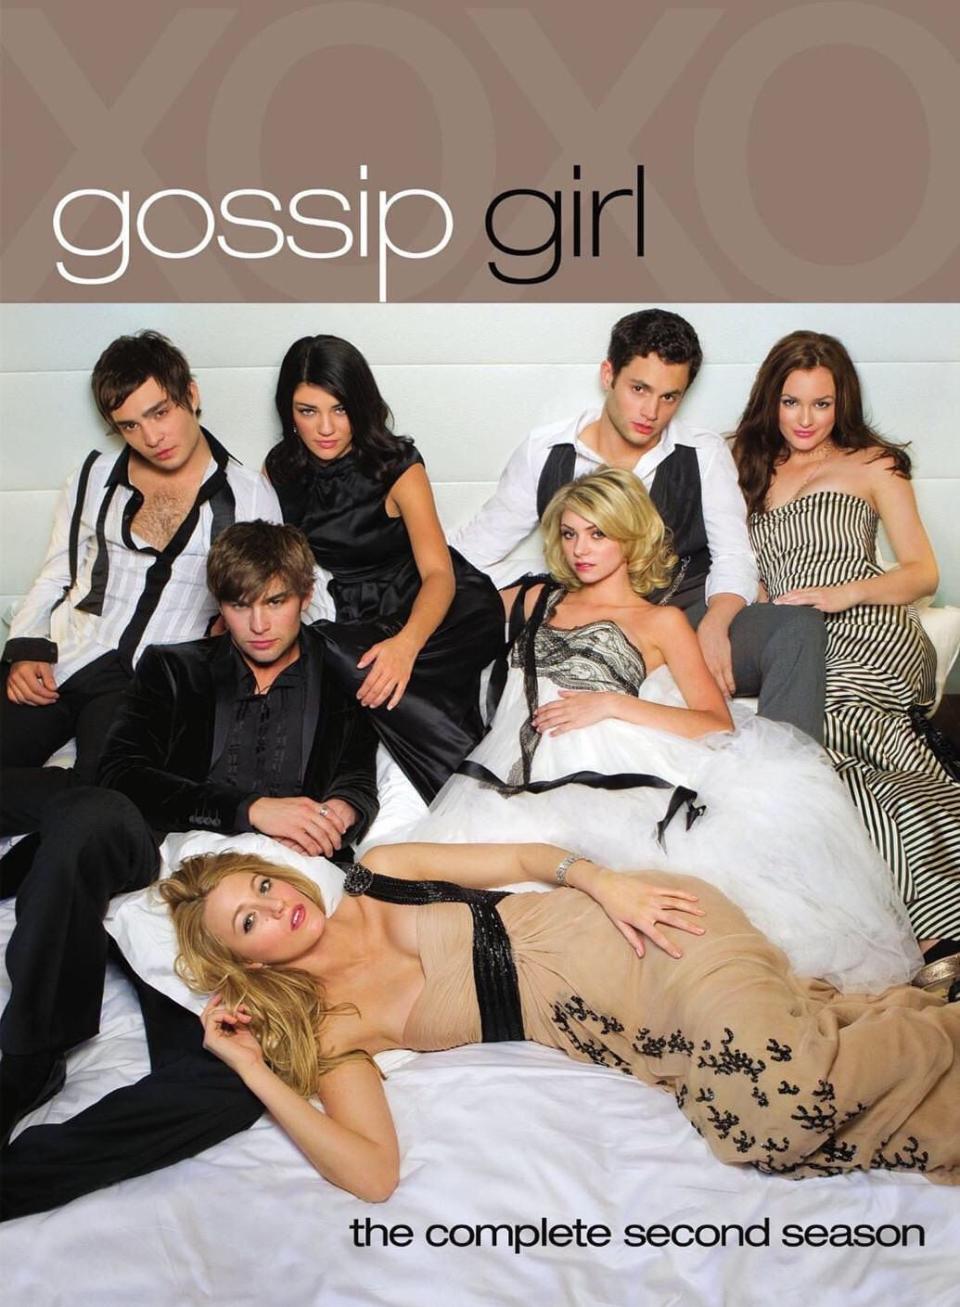 <p>新版的《<span>Gossip Girl</span> 花邊教主》將由上一部的製作人喬許施瓦茨（Josh Schwartz）和史蒂芬妮薩維吉（Stephanie Savage）回鍋主導，Joshua Safran 將回歸編劇。</p><cite>《Gossip Girl》</cite>